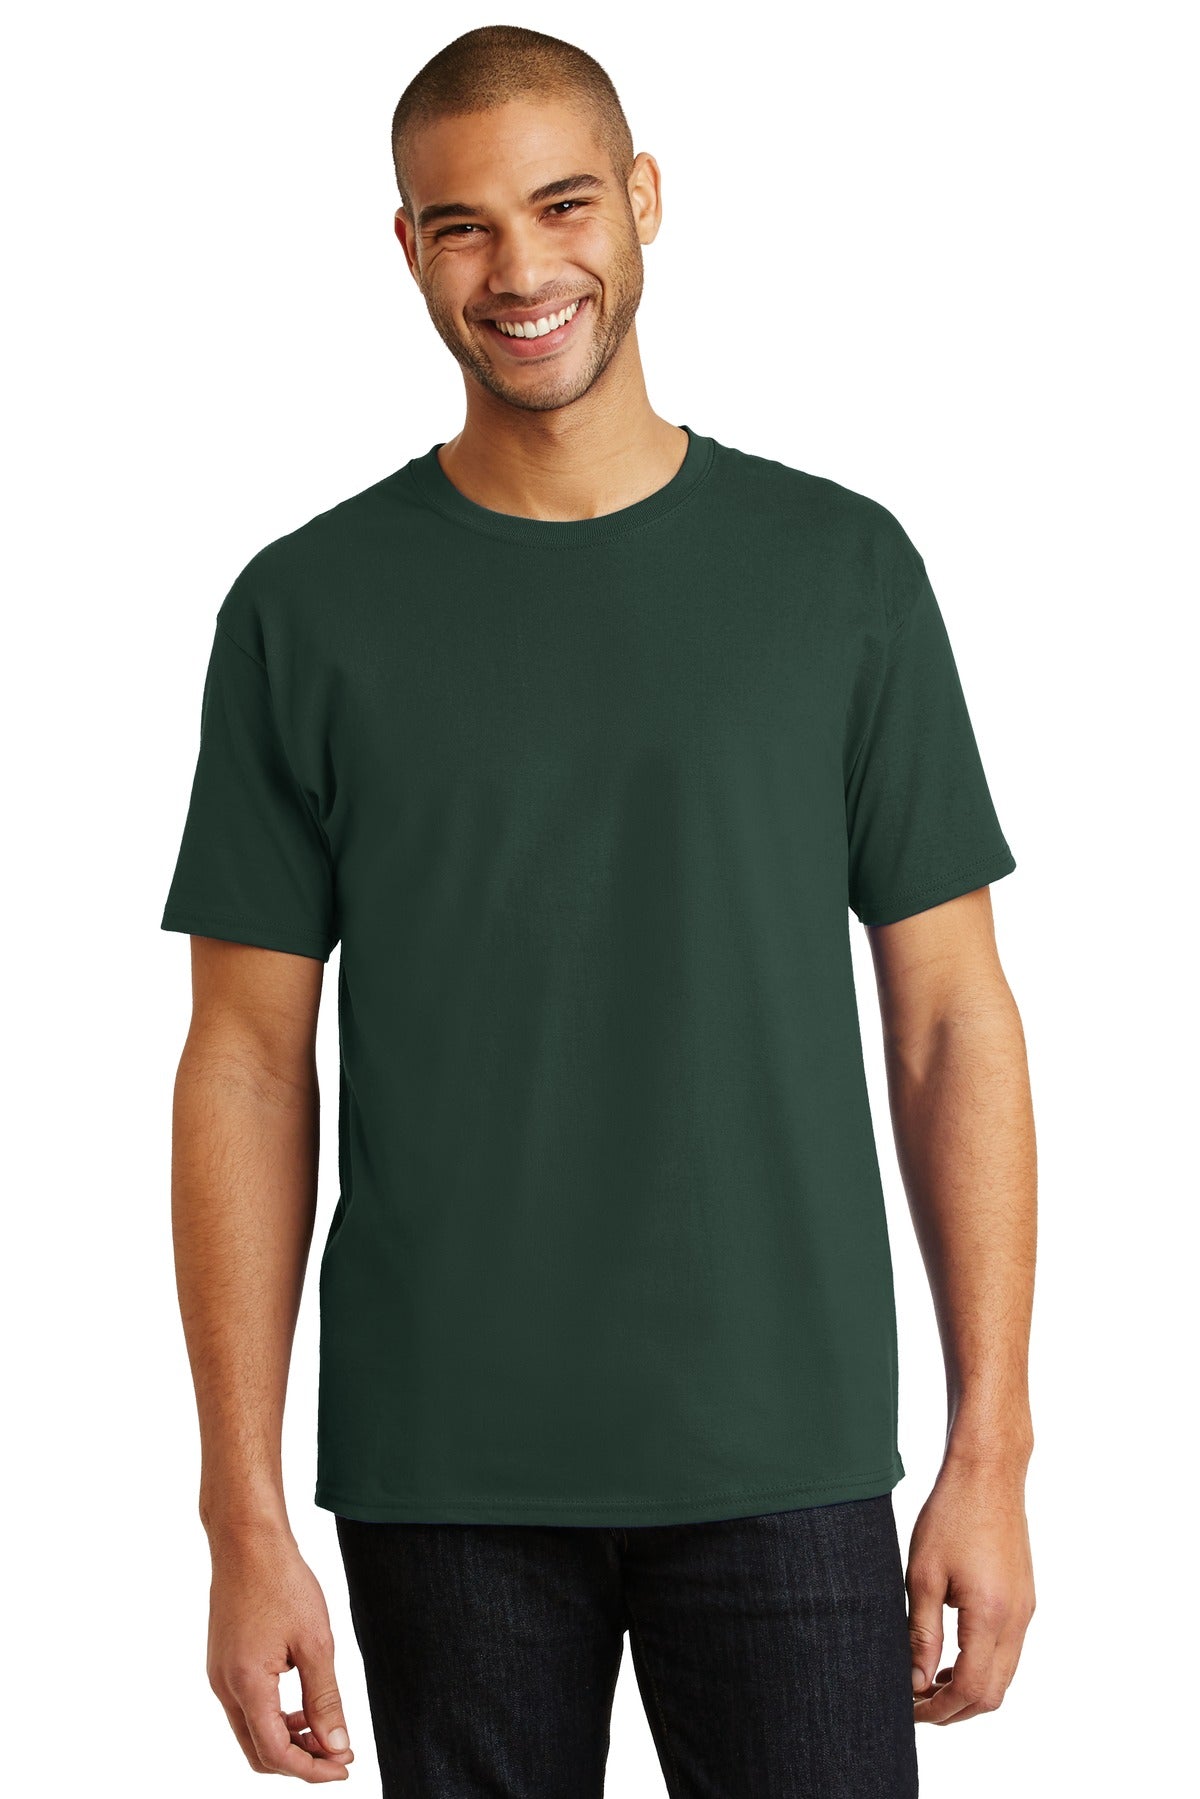 Hanes Unisex ComfortSoft® Cotton T-Shirt S Charcoal Heather